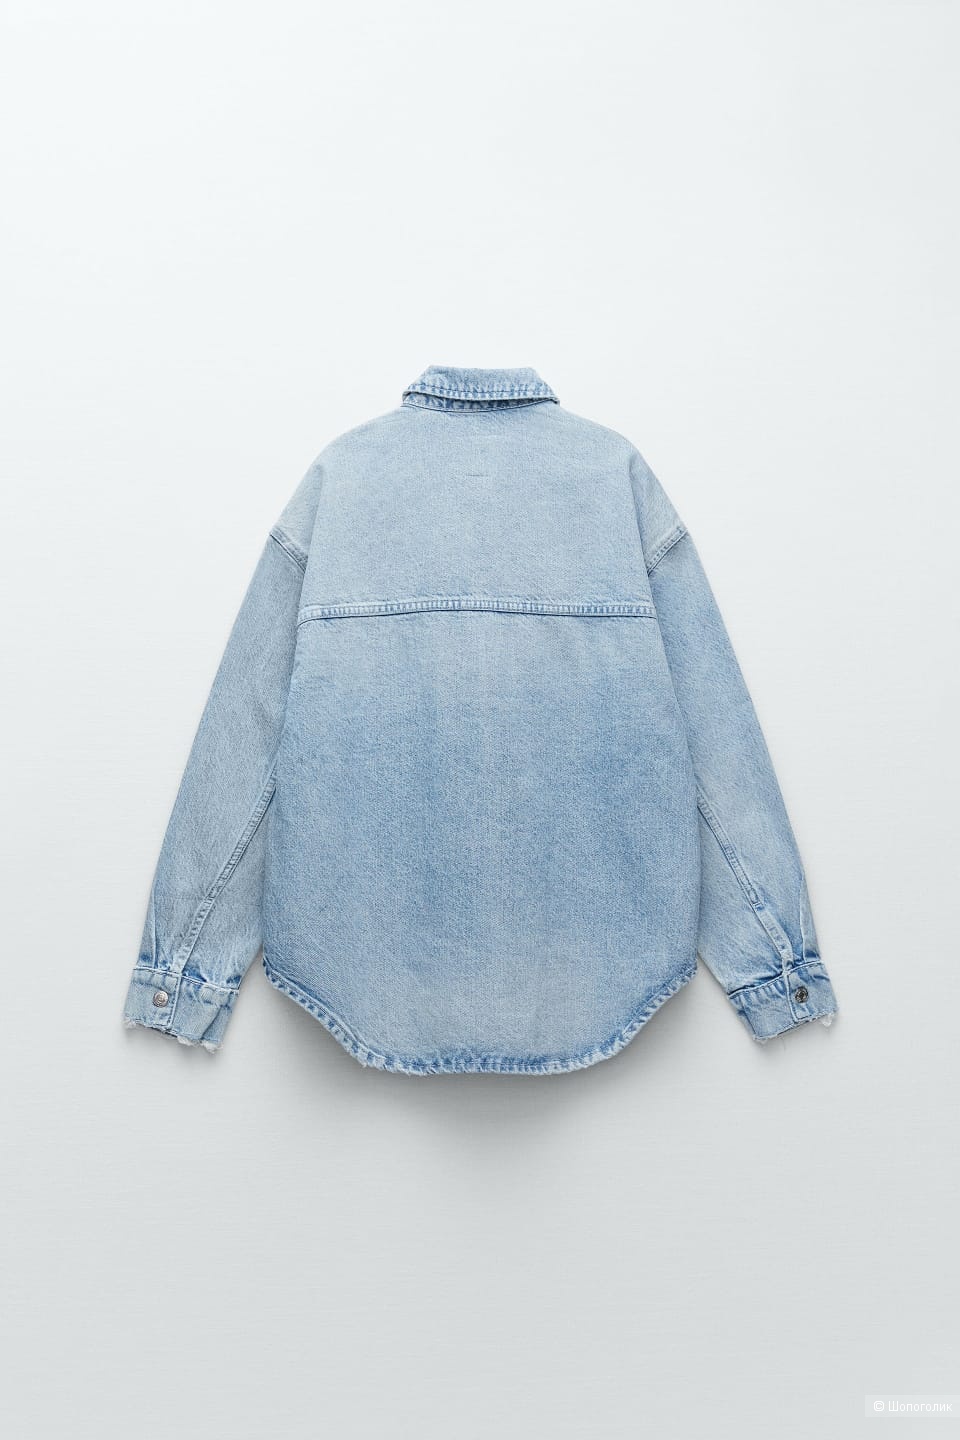 Джинсовая куртка-рубашка Zara/L